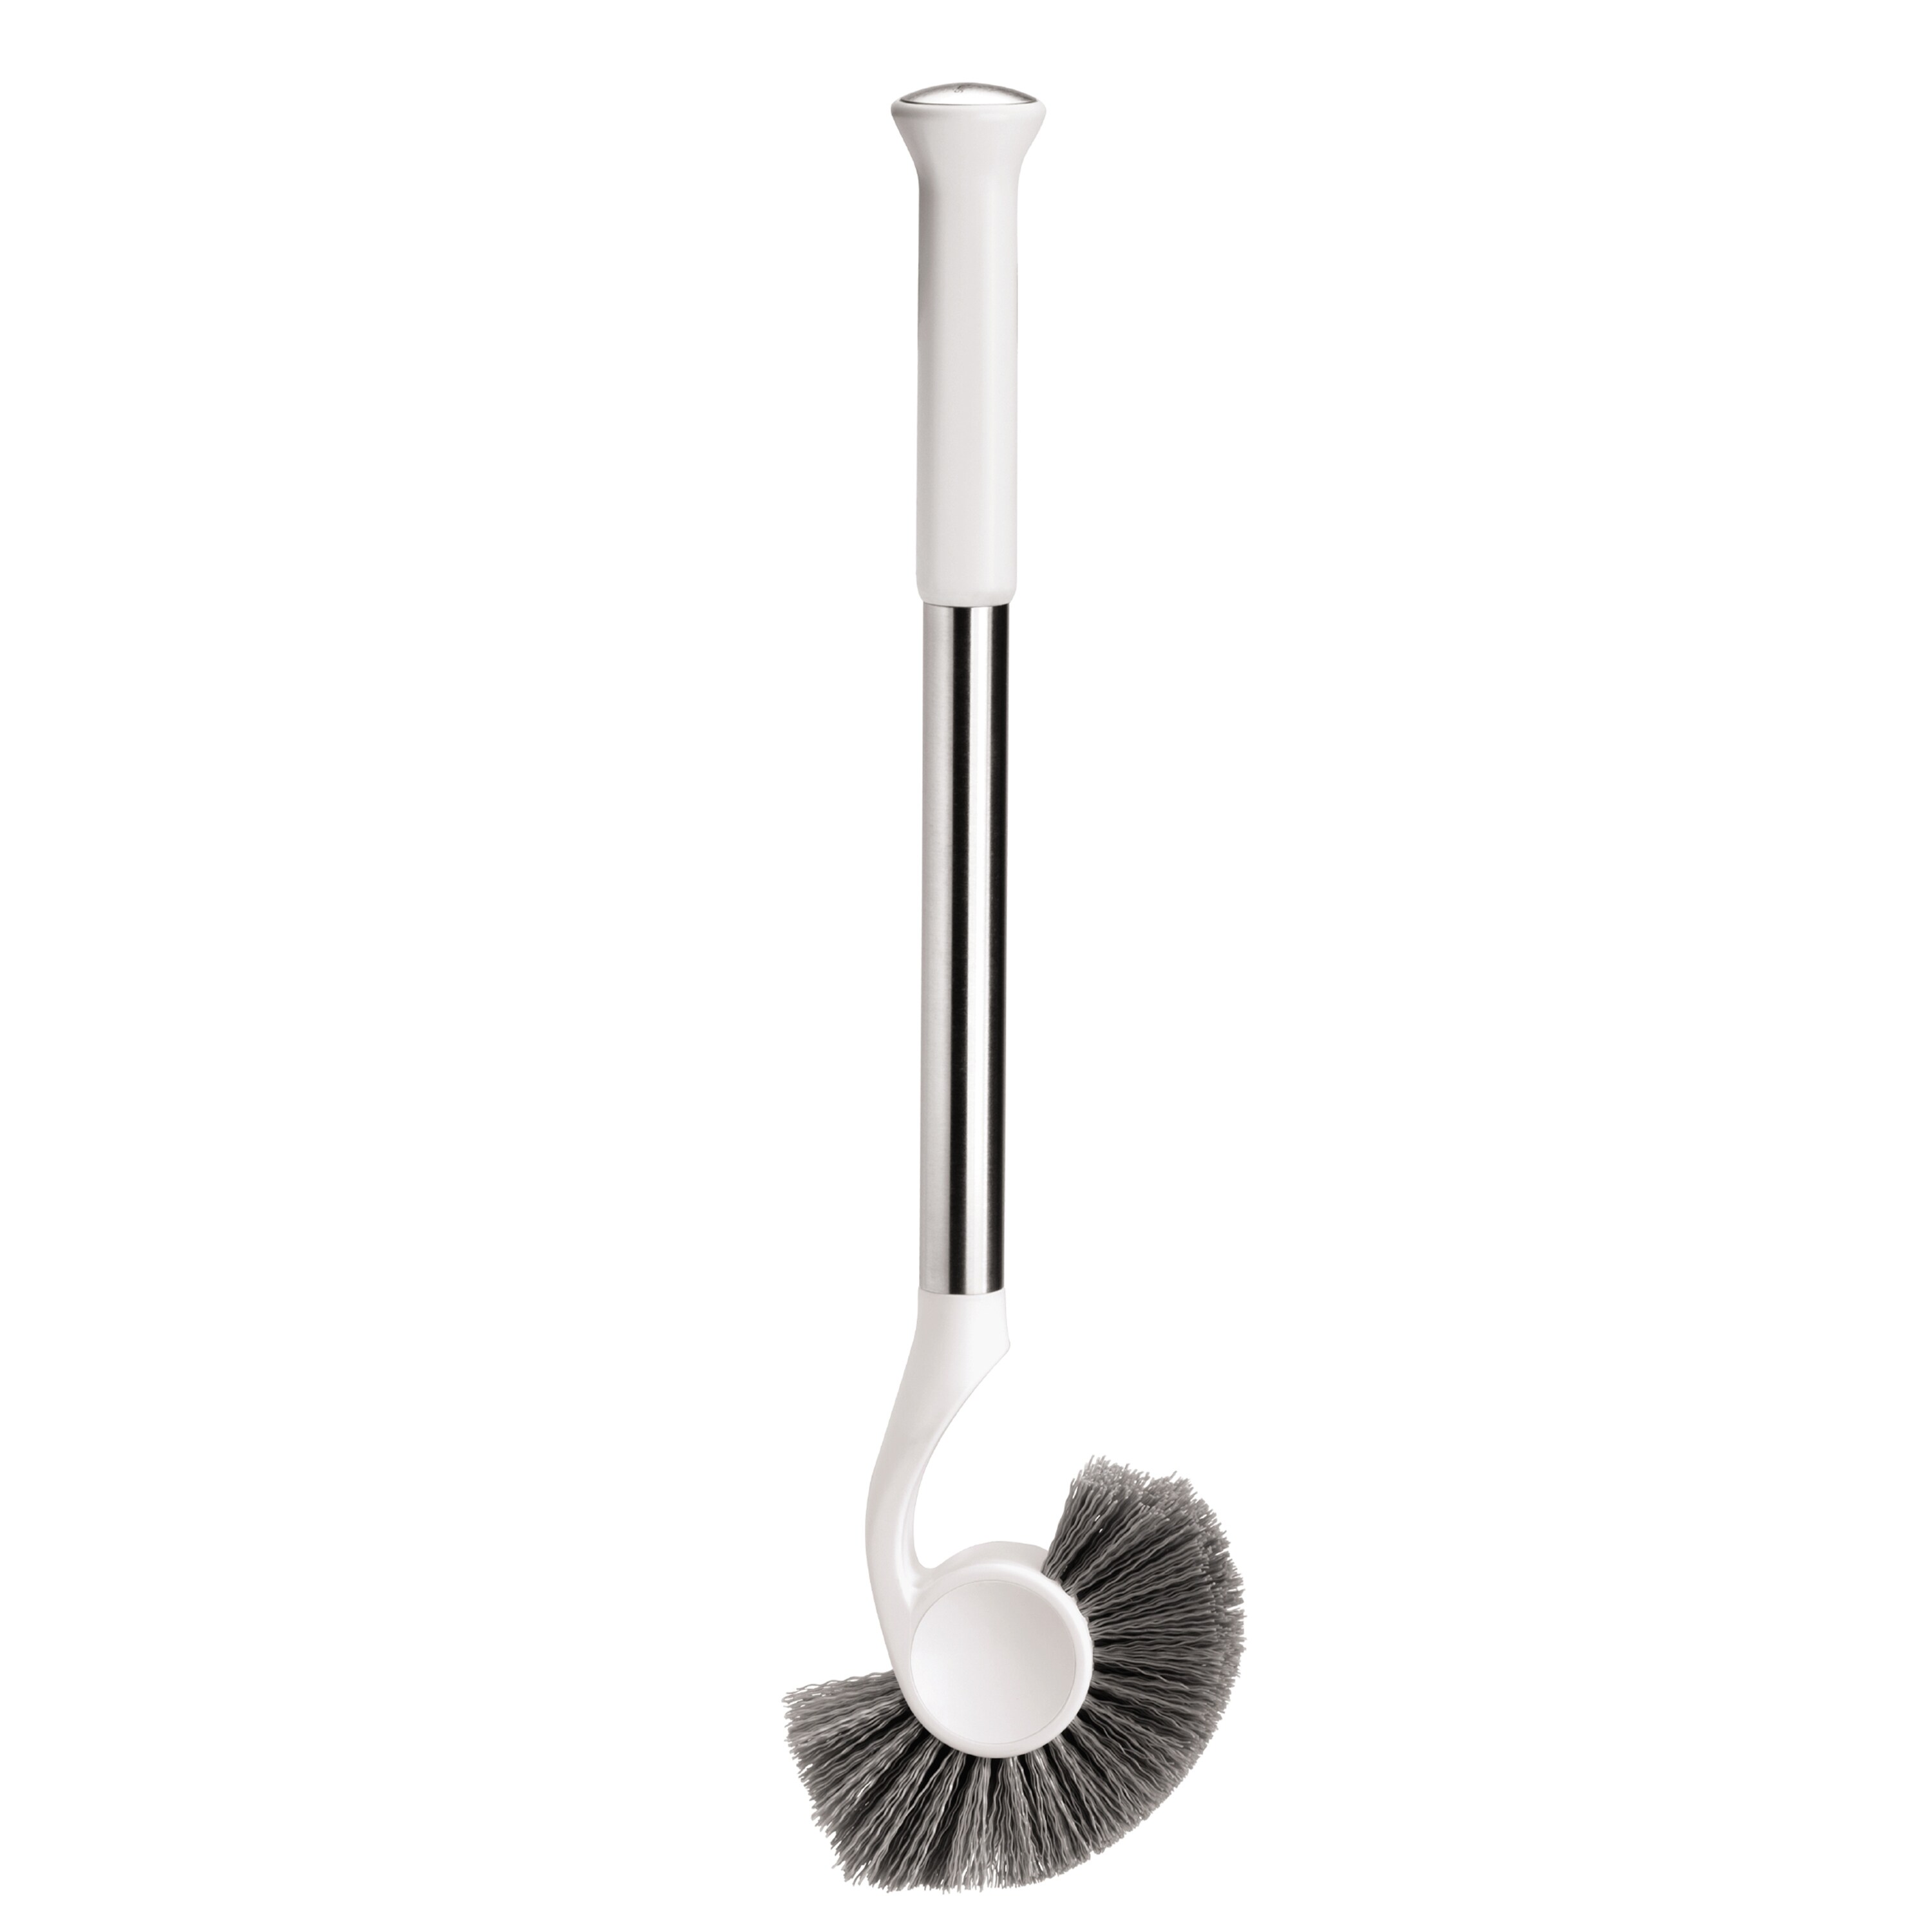 Black simplehuman Replacement Crescent Toilet Brush Head Spare Plastic BT1095 